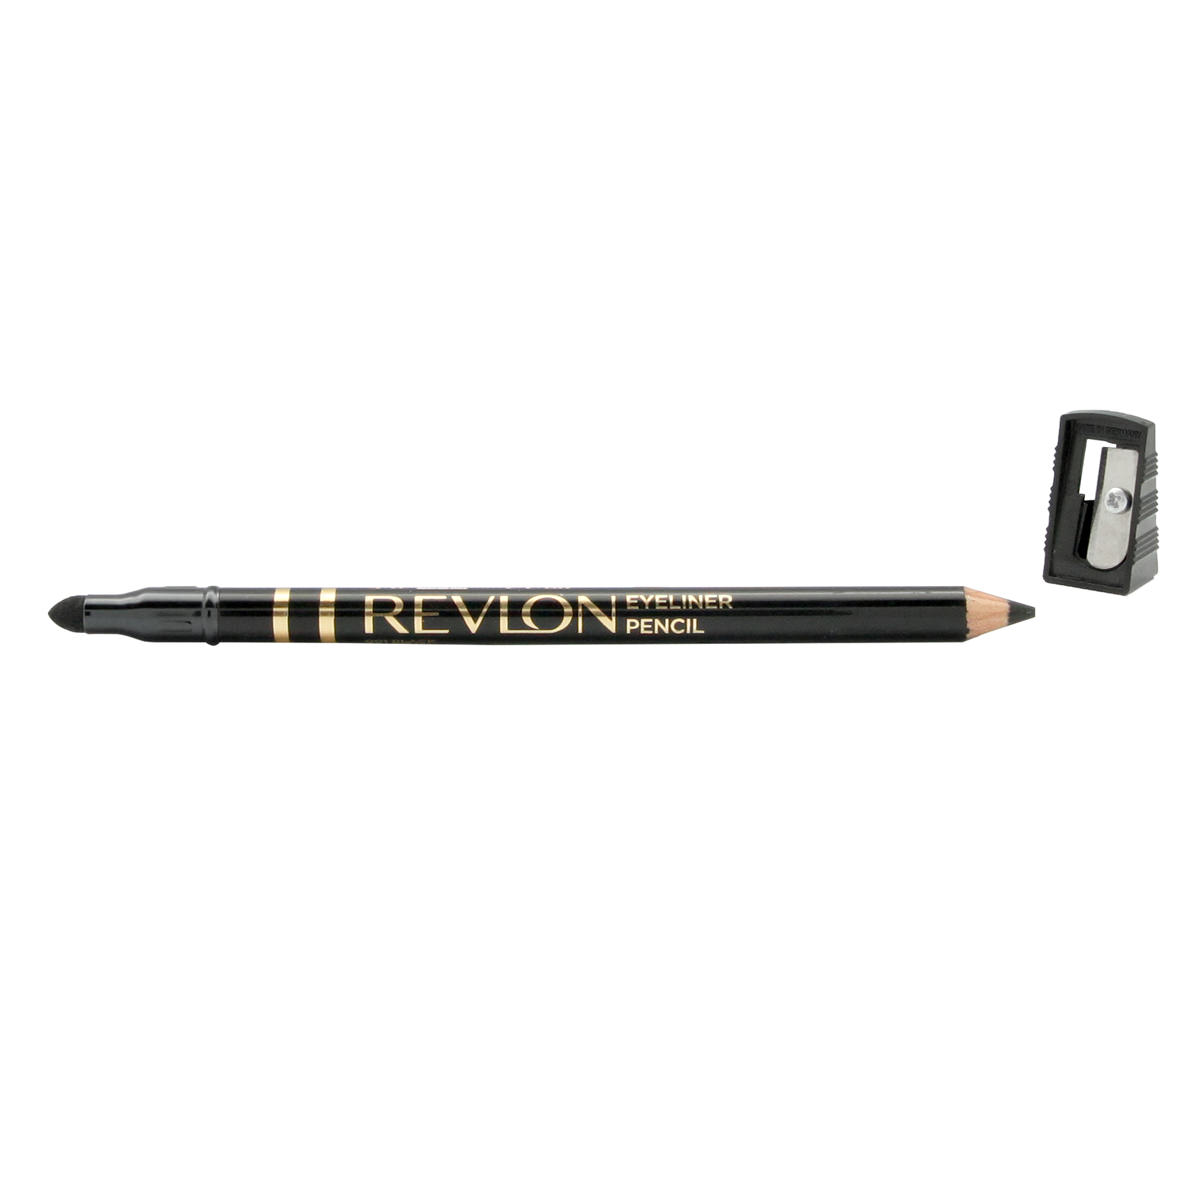 Revlon-Eyeliner-Pencil-Black-Edited-sfw(1)